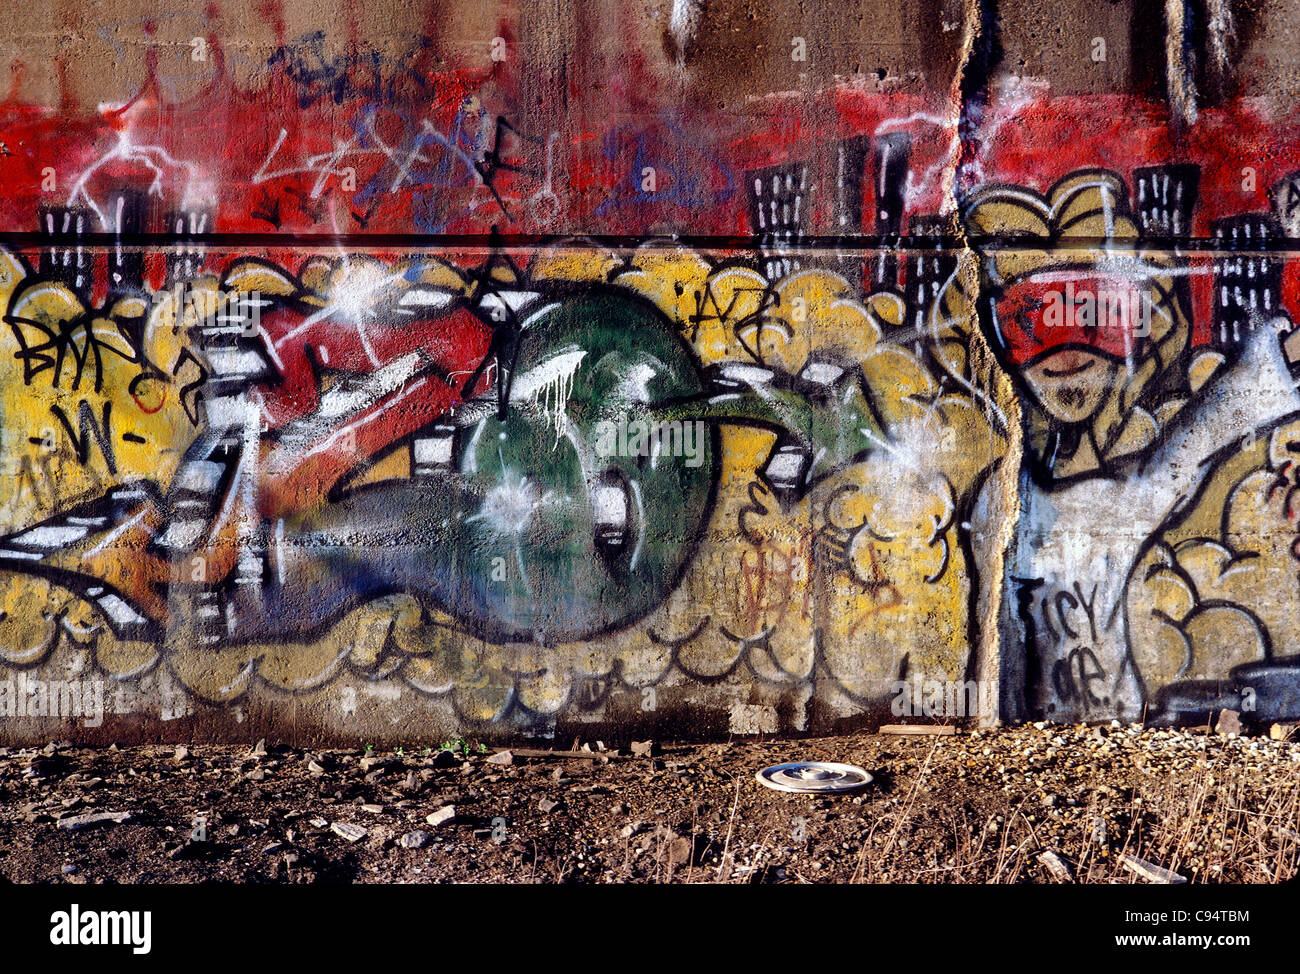 Colorful graffitti art on a concrete wall in Philadelphia, Pennsylvania, USA Stock Photo